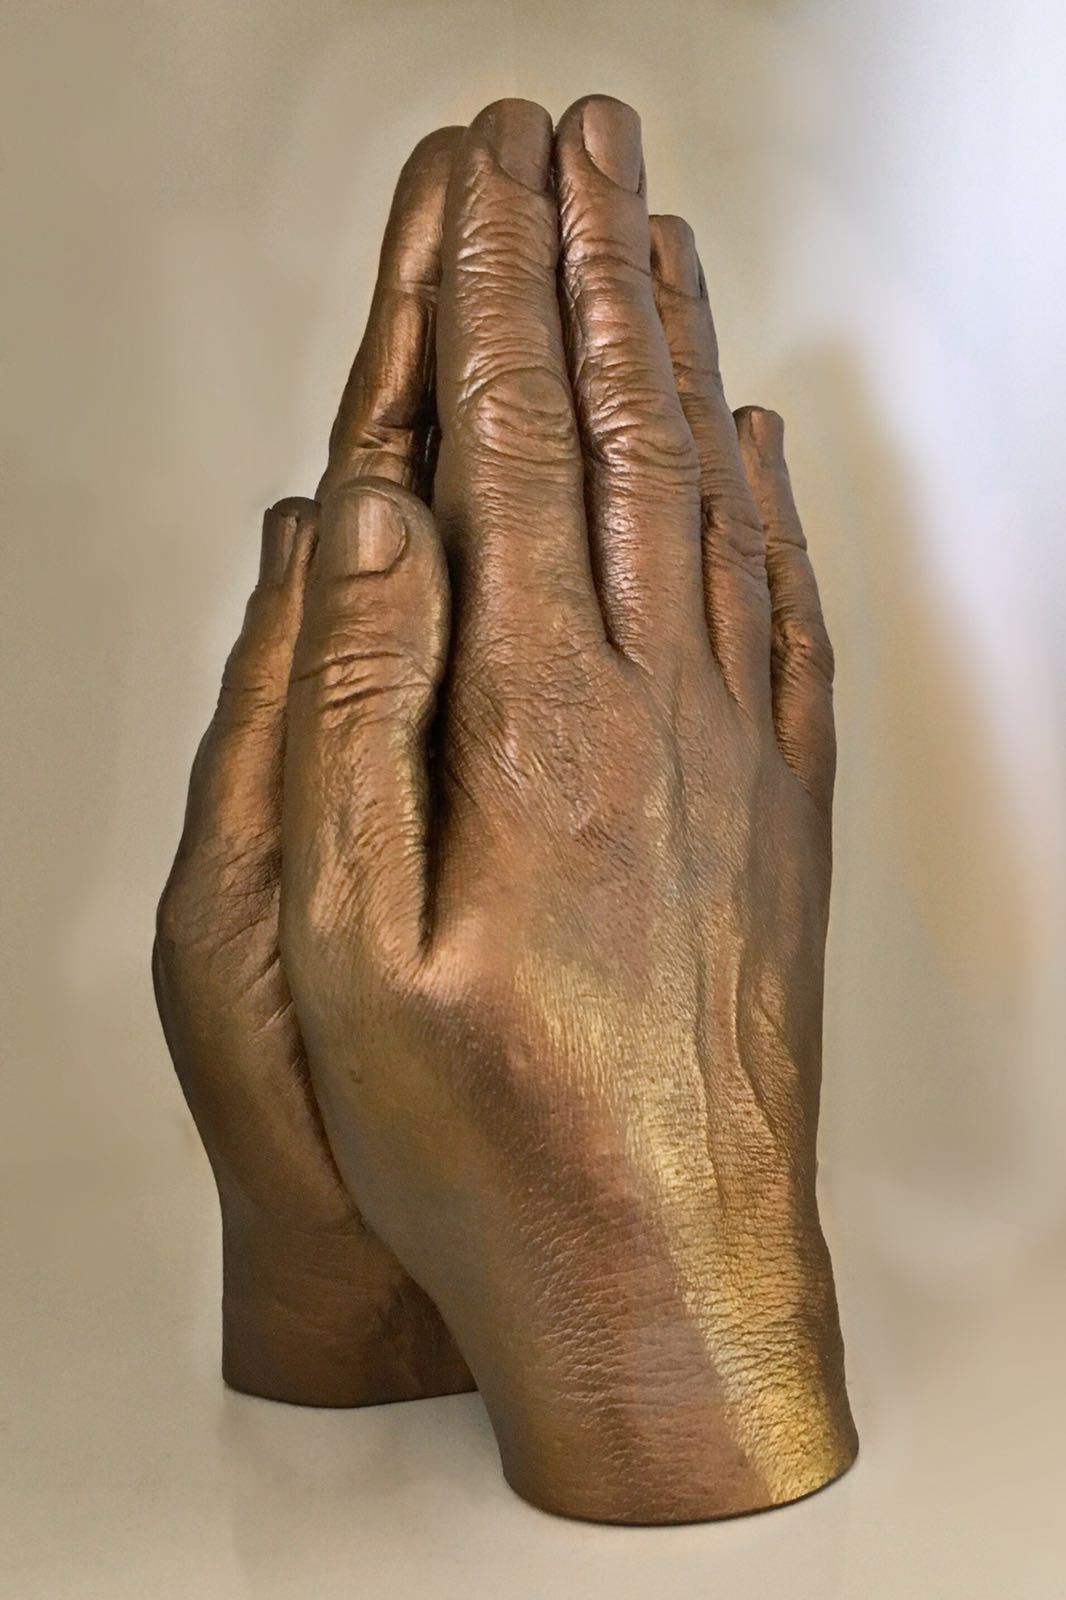 Praying hands statue